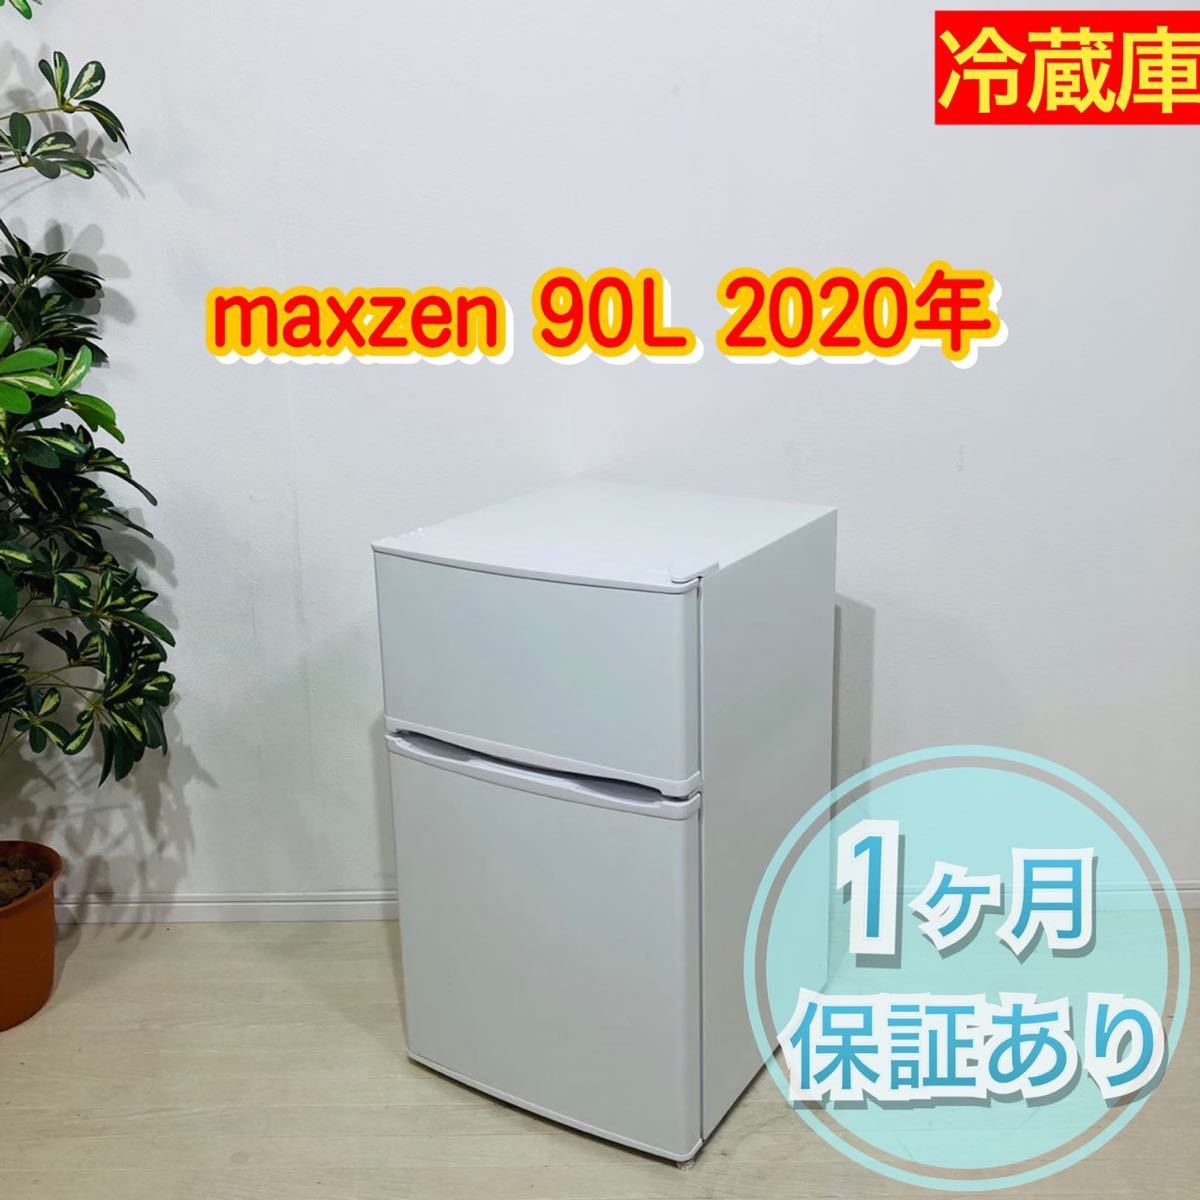 maxzen 2ドア冷蔵庫 90L 2020年製 a0688 -